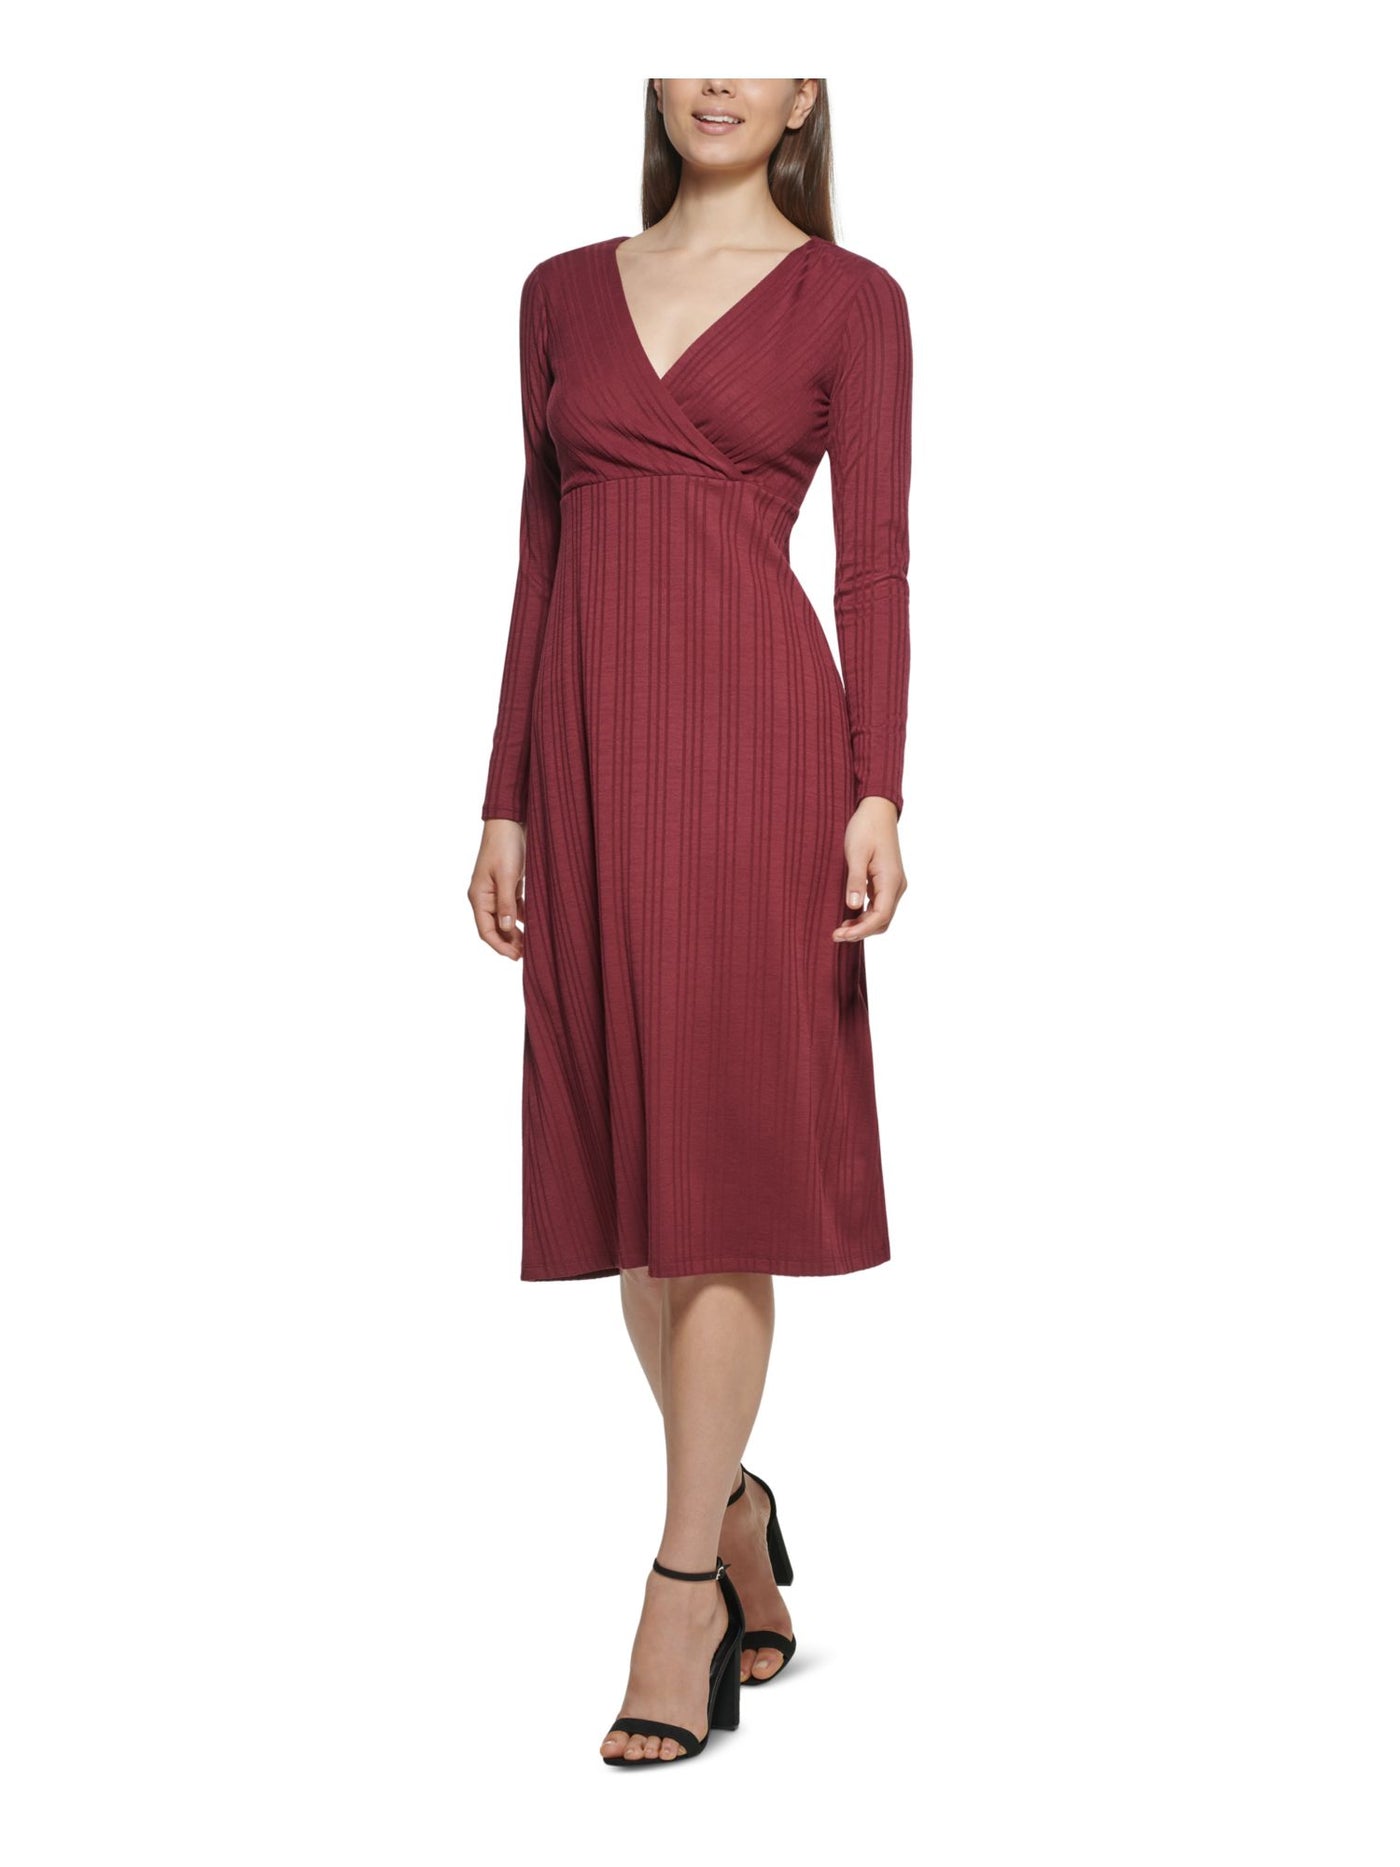 KENSIE DRESSES Womens Maroon Knit Ribbed Lined Pullover Long Sleeve Surplice Neckline Midi Wear To Work Dress XS